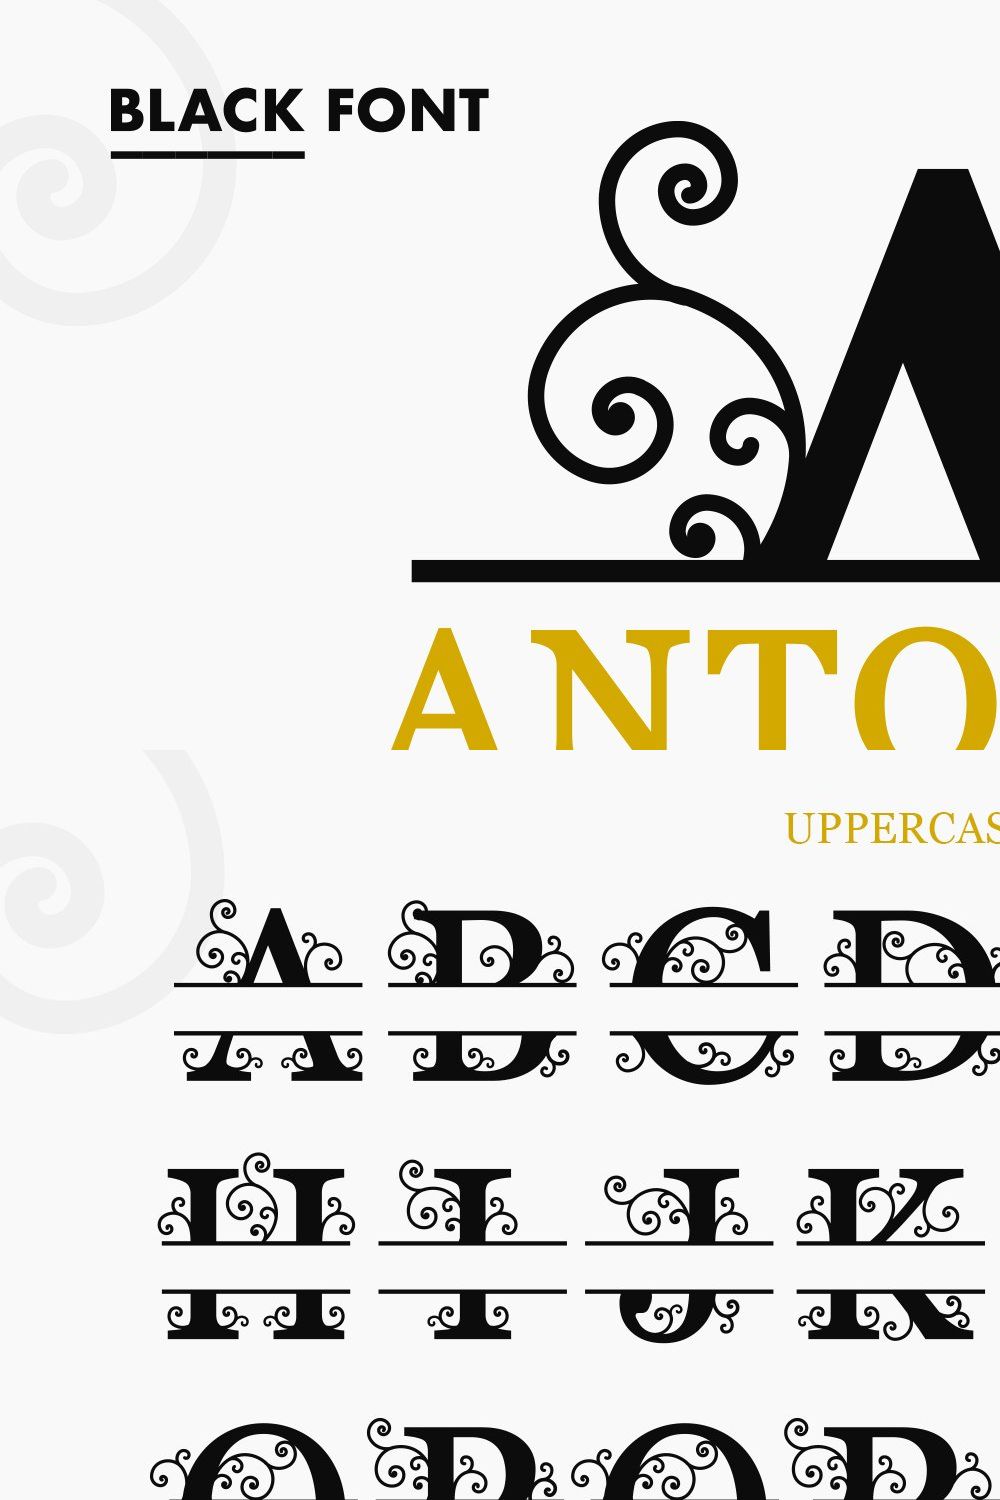 Antonio - Split Monogram Font pinterest preview image.